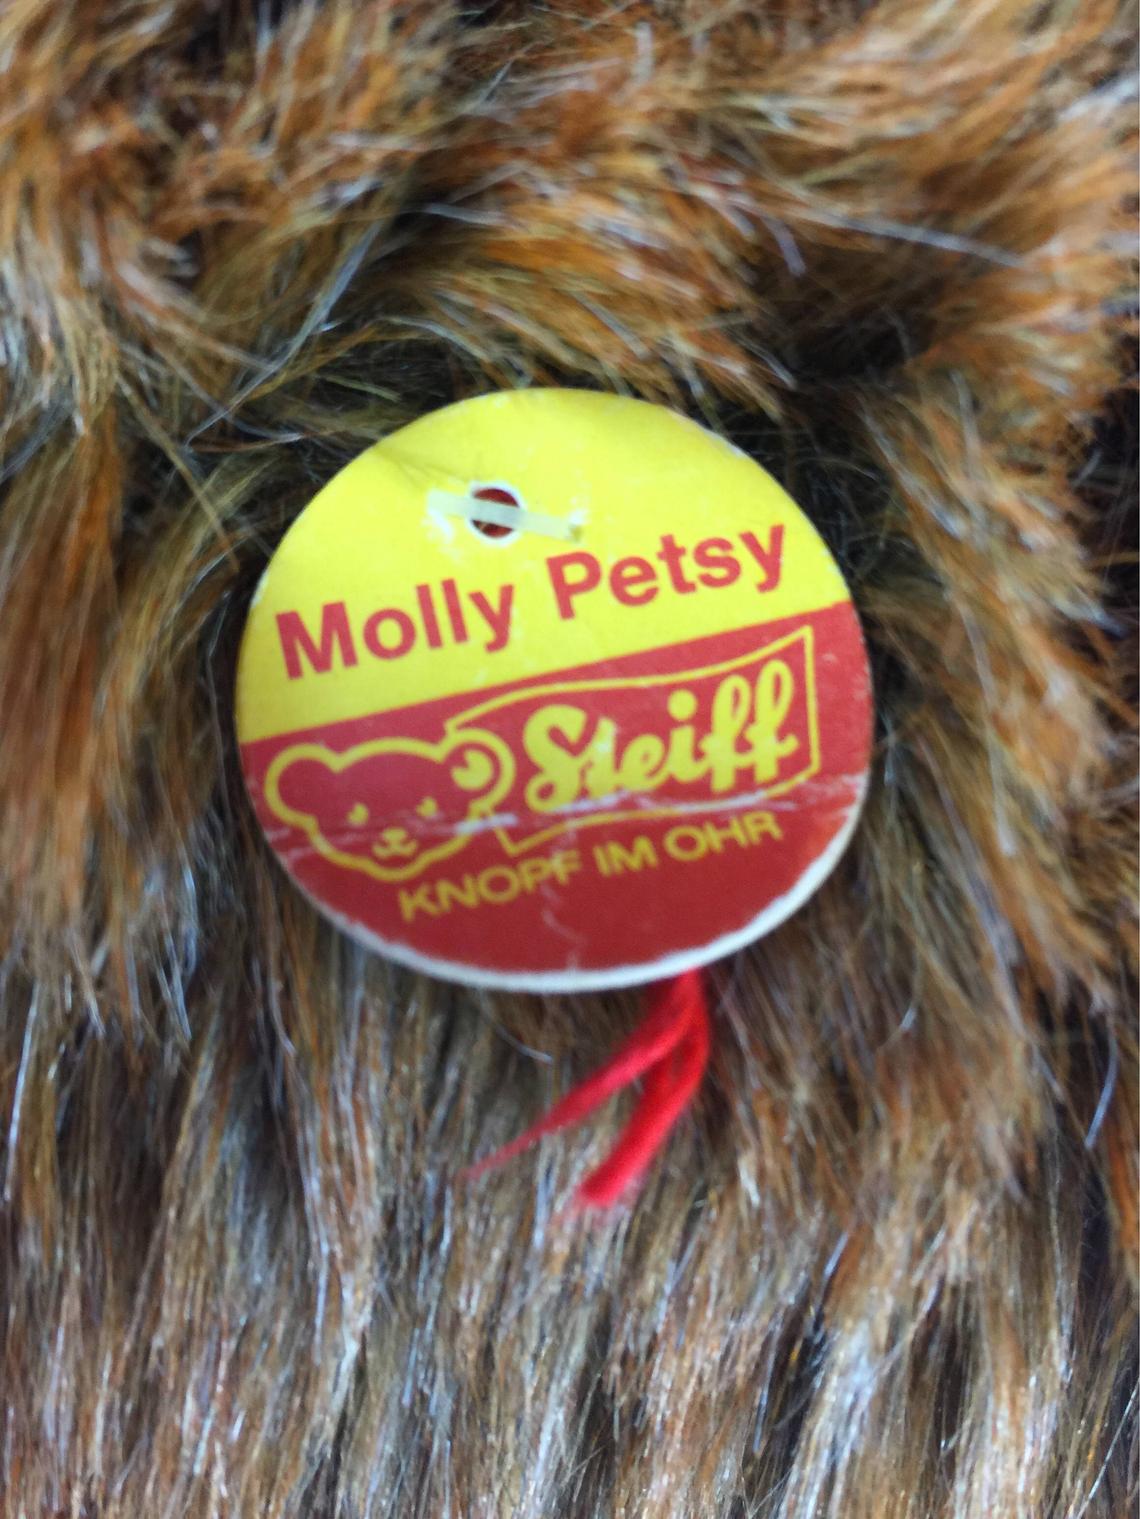 Steiff molly petsy tag.jpg